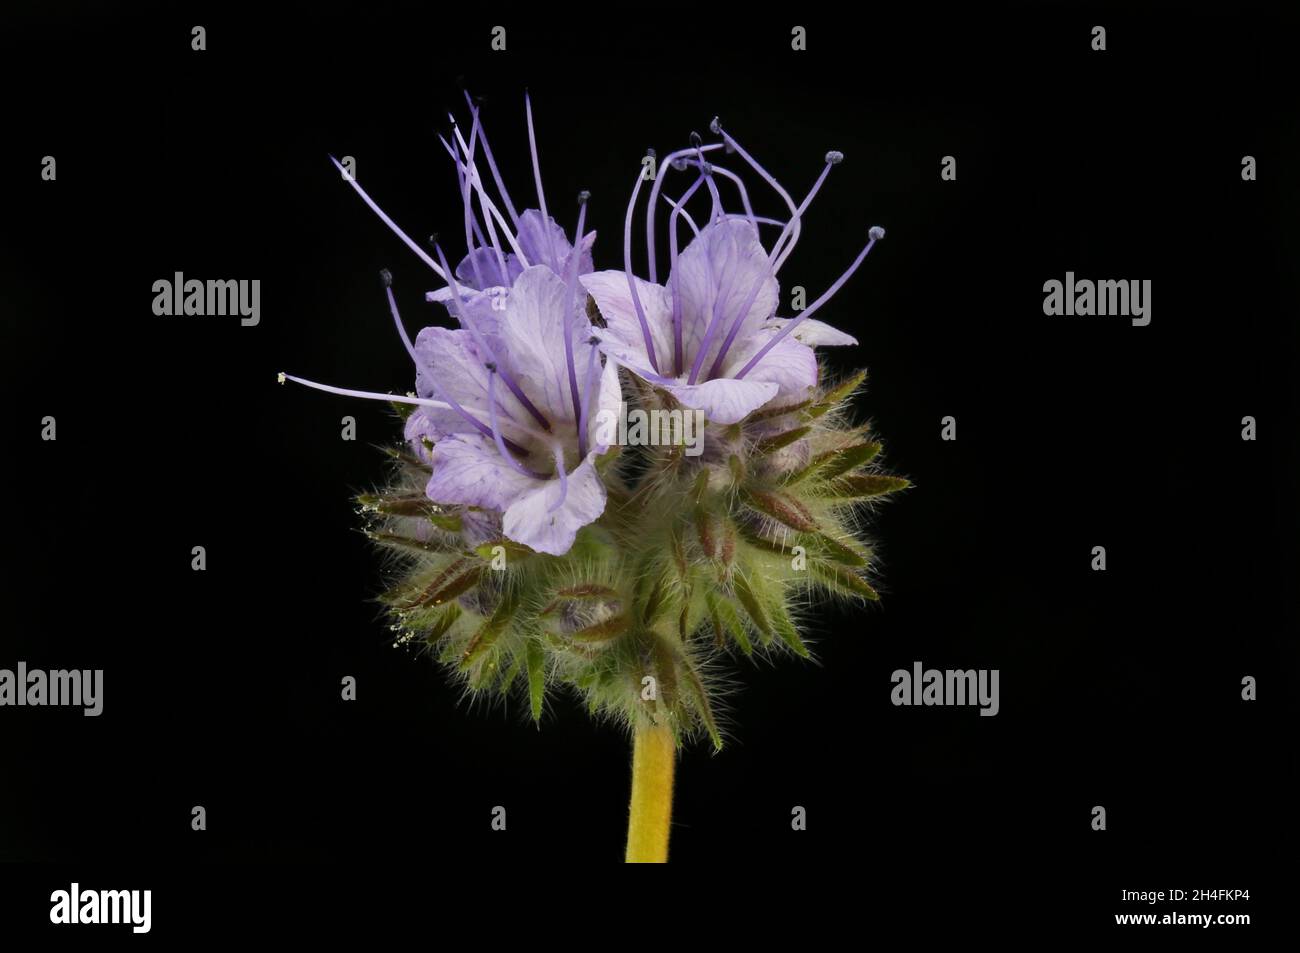 Phacelia fiori isolati contro nero Foto Stock